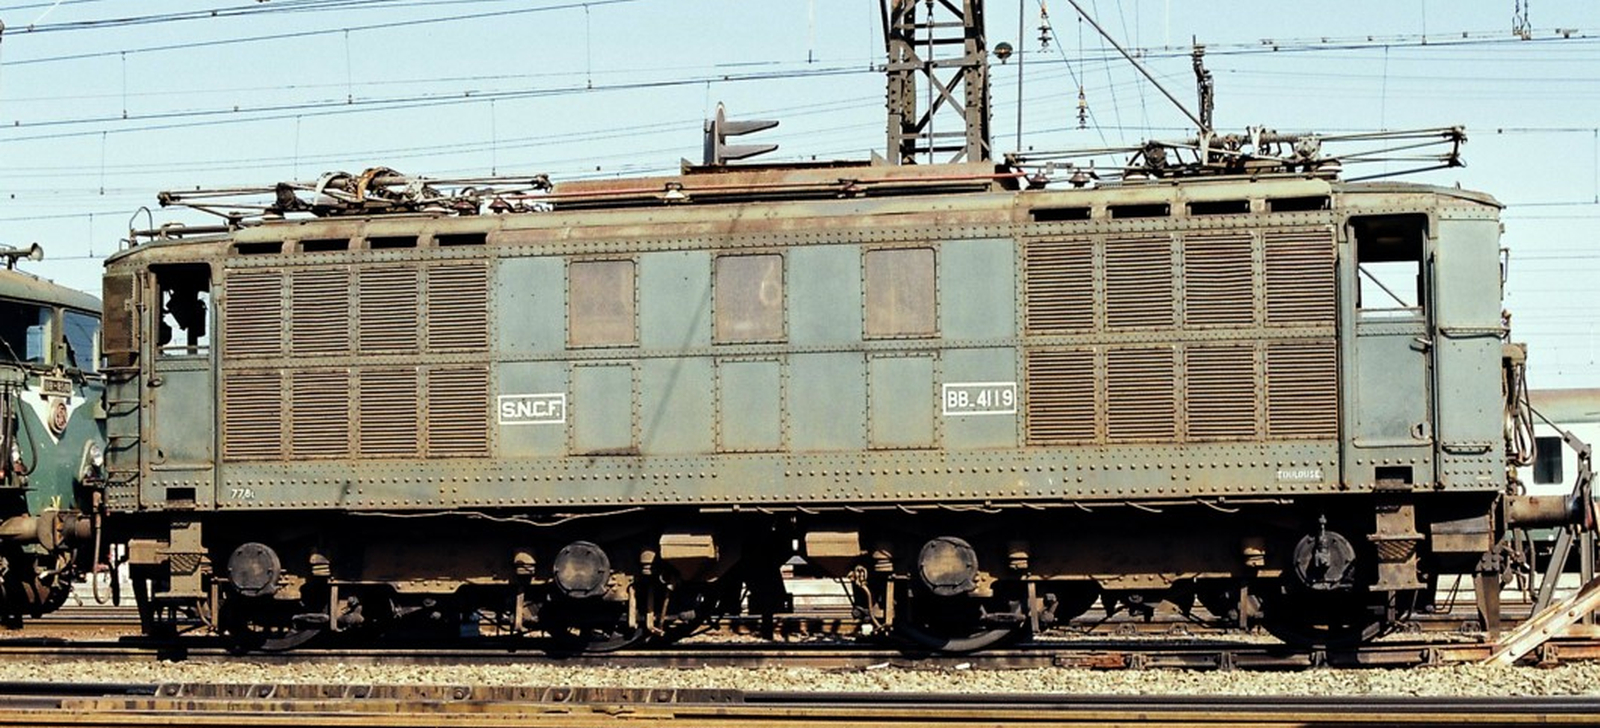 SNCF BB 4119 parked at Tarbes in September 1983